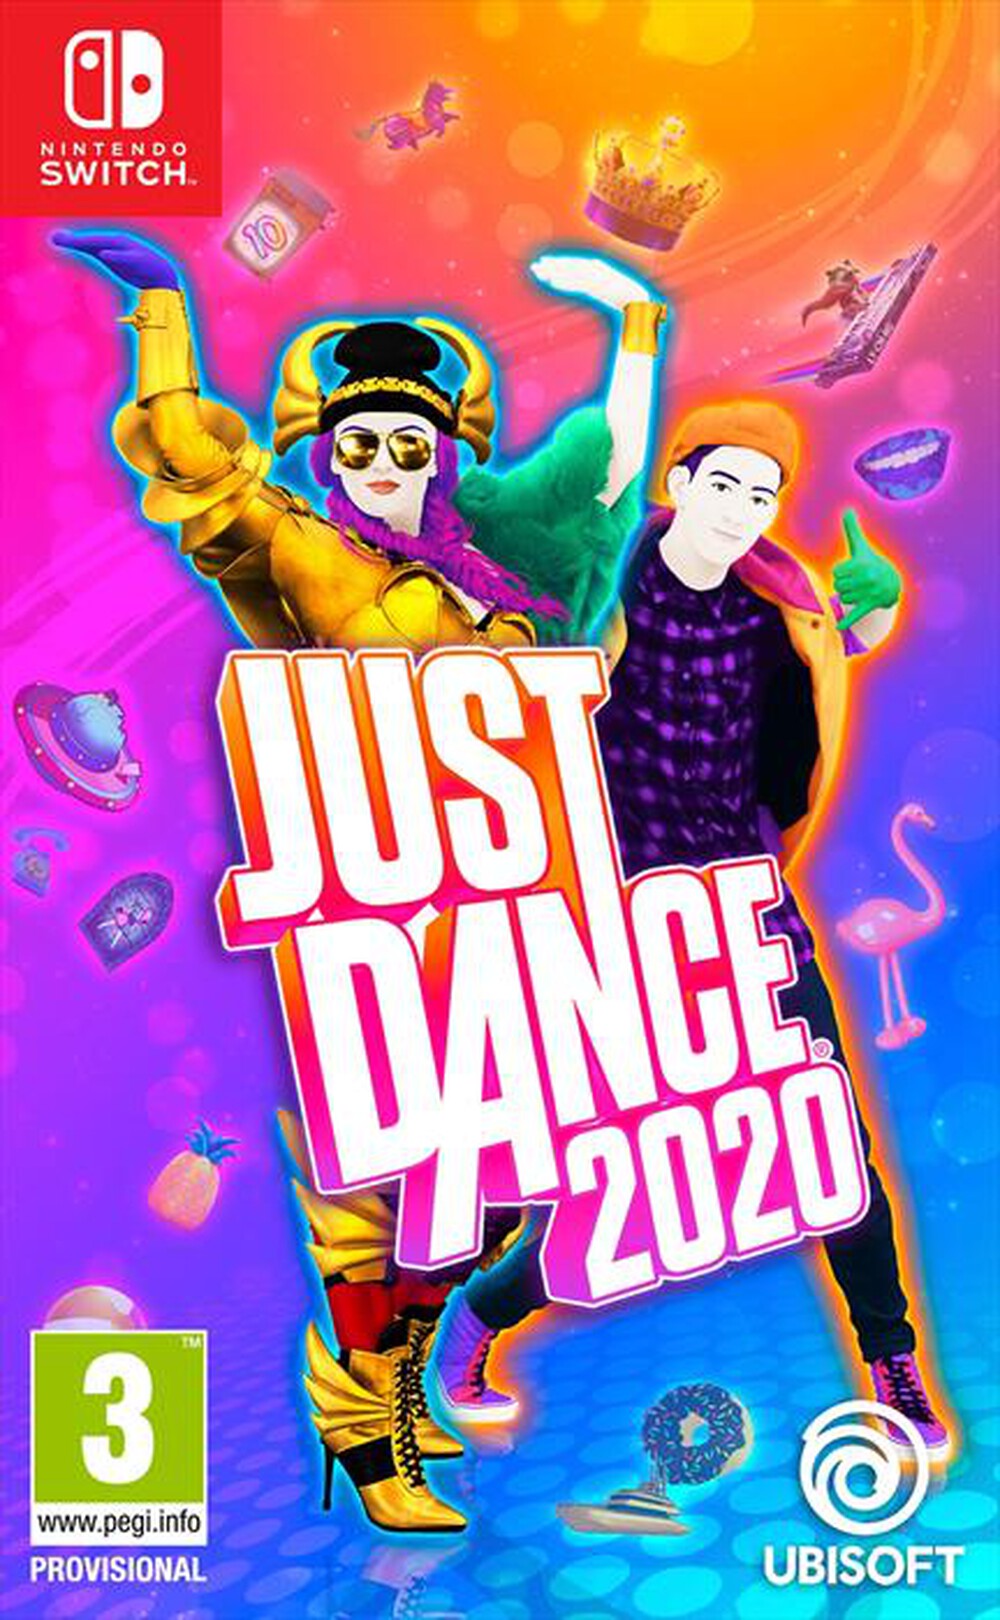 "UBISOFT - JUST DANCE 2020 ITA SWITCH"